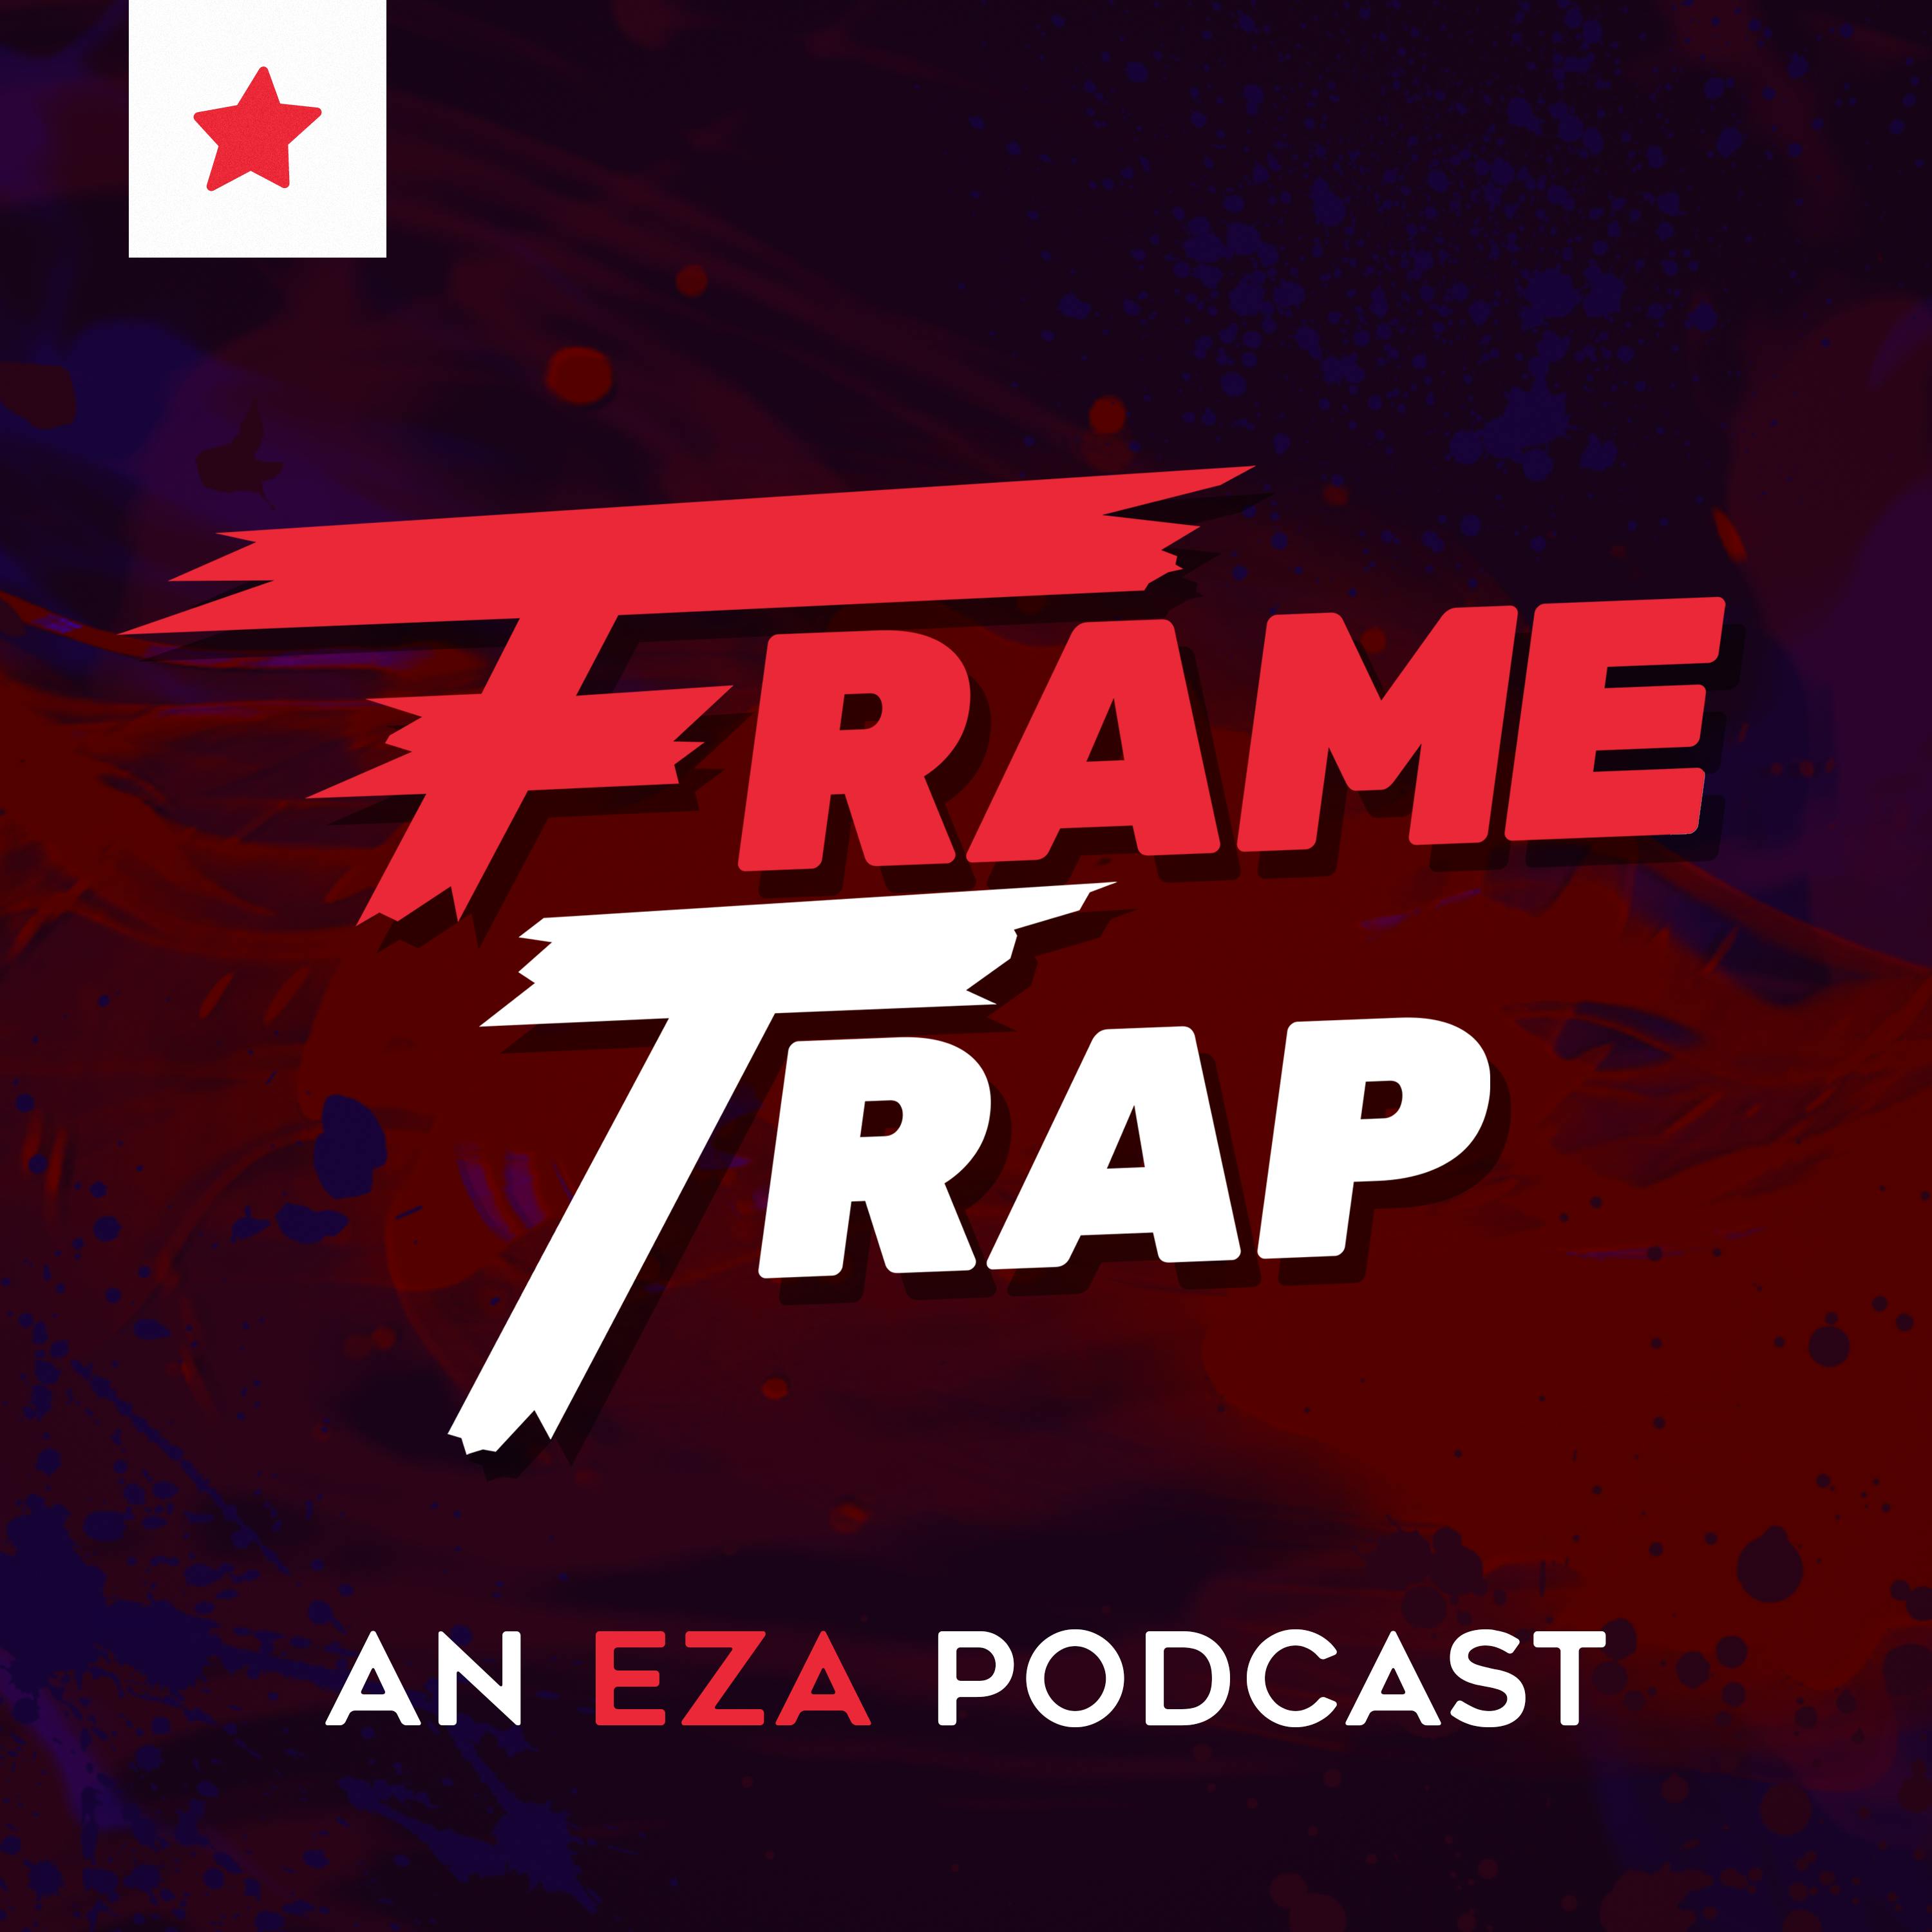 Frame Trap - Episode 175 